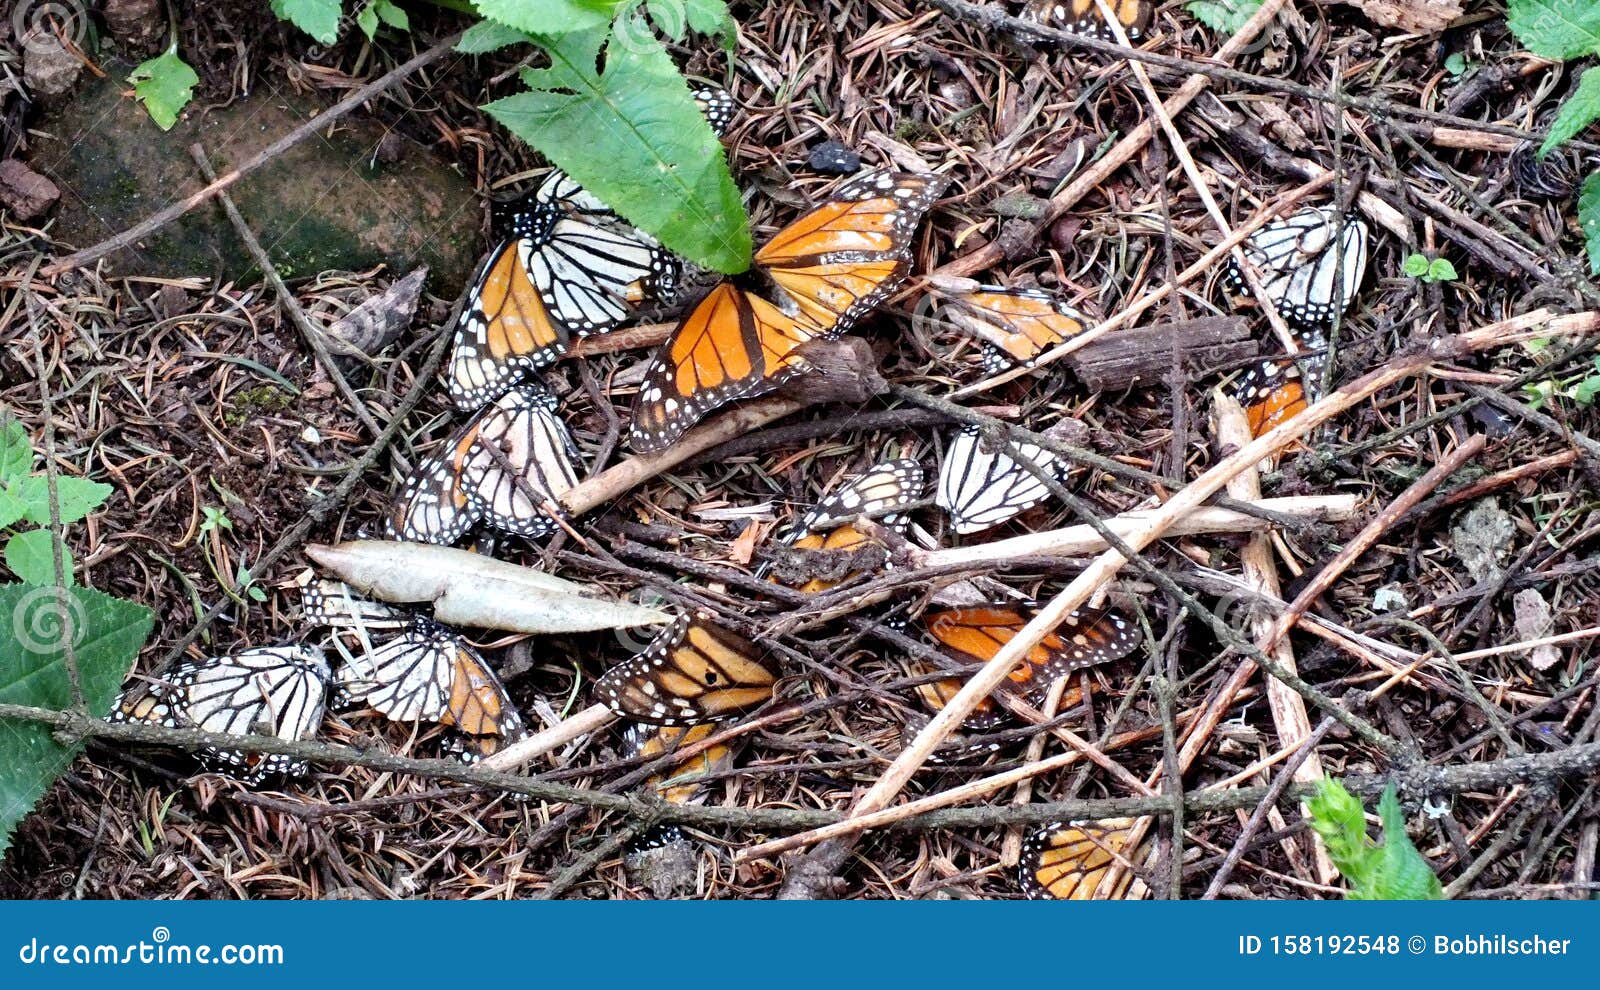 dead monarch butterflies on the forest floor at el capulin sanctuary